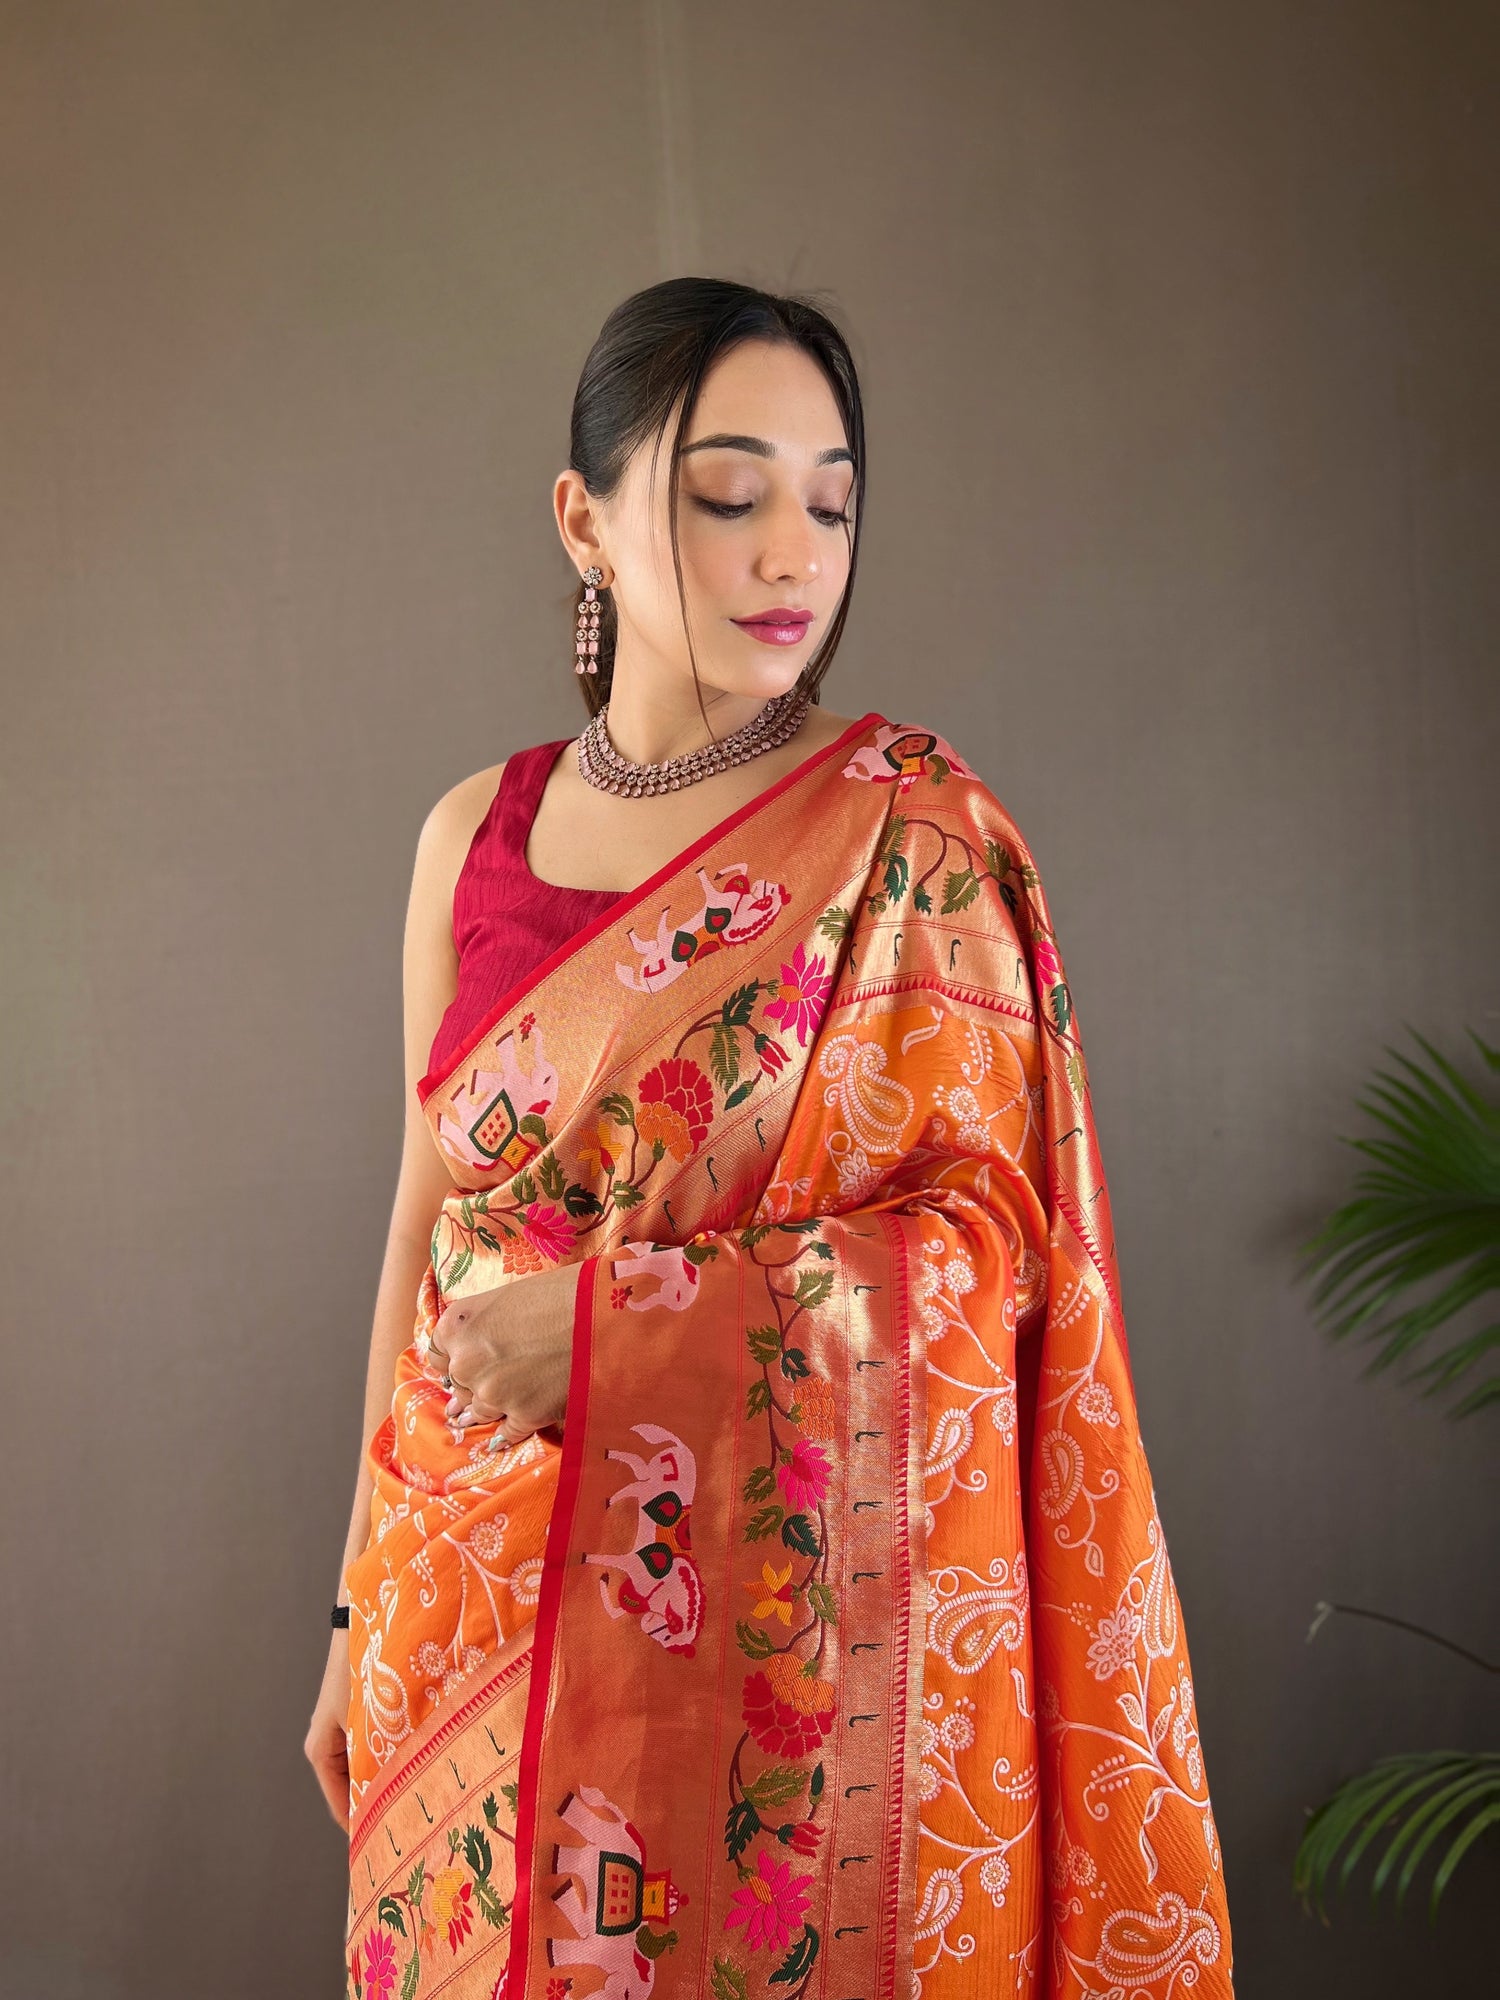 Beautiful Orange Colour Soft Silk Saree